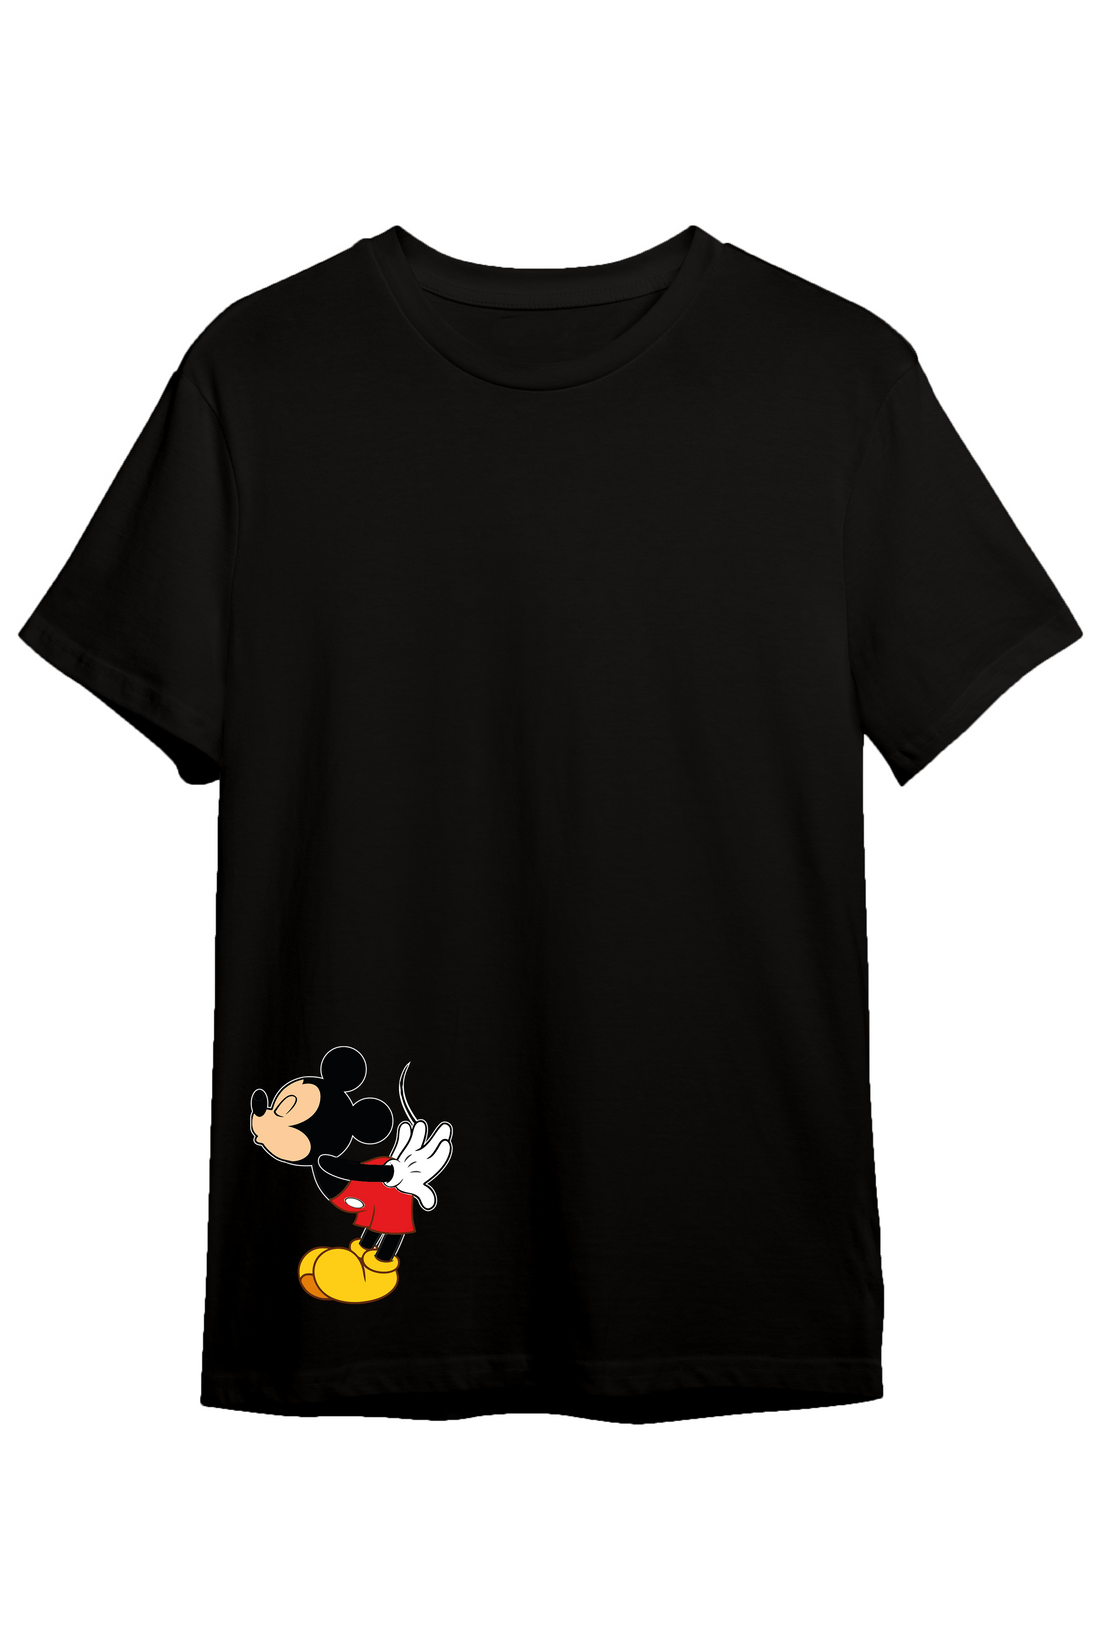 Mickey Kİss - Çocuk Tshirt - Regular